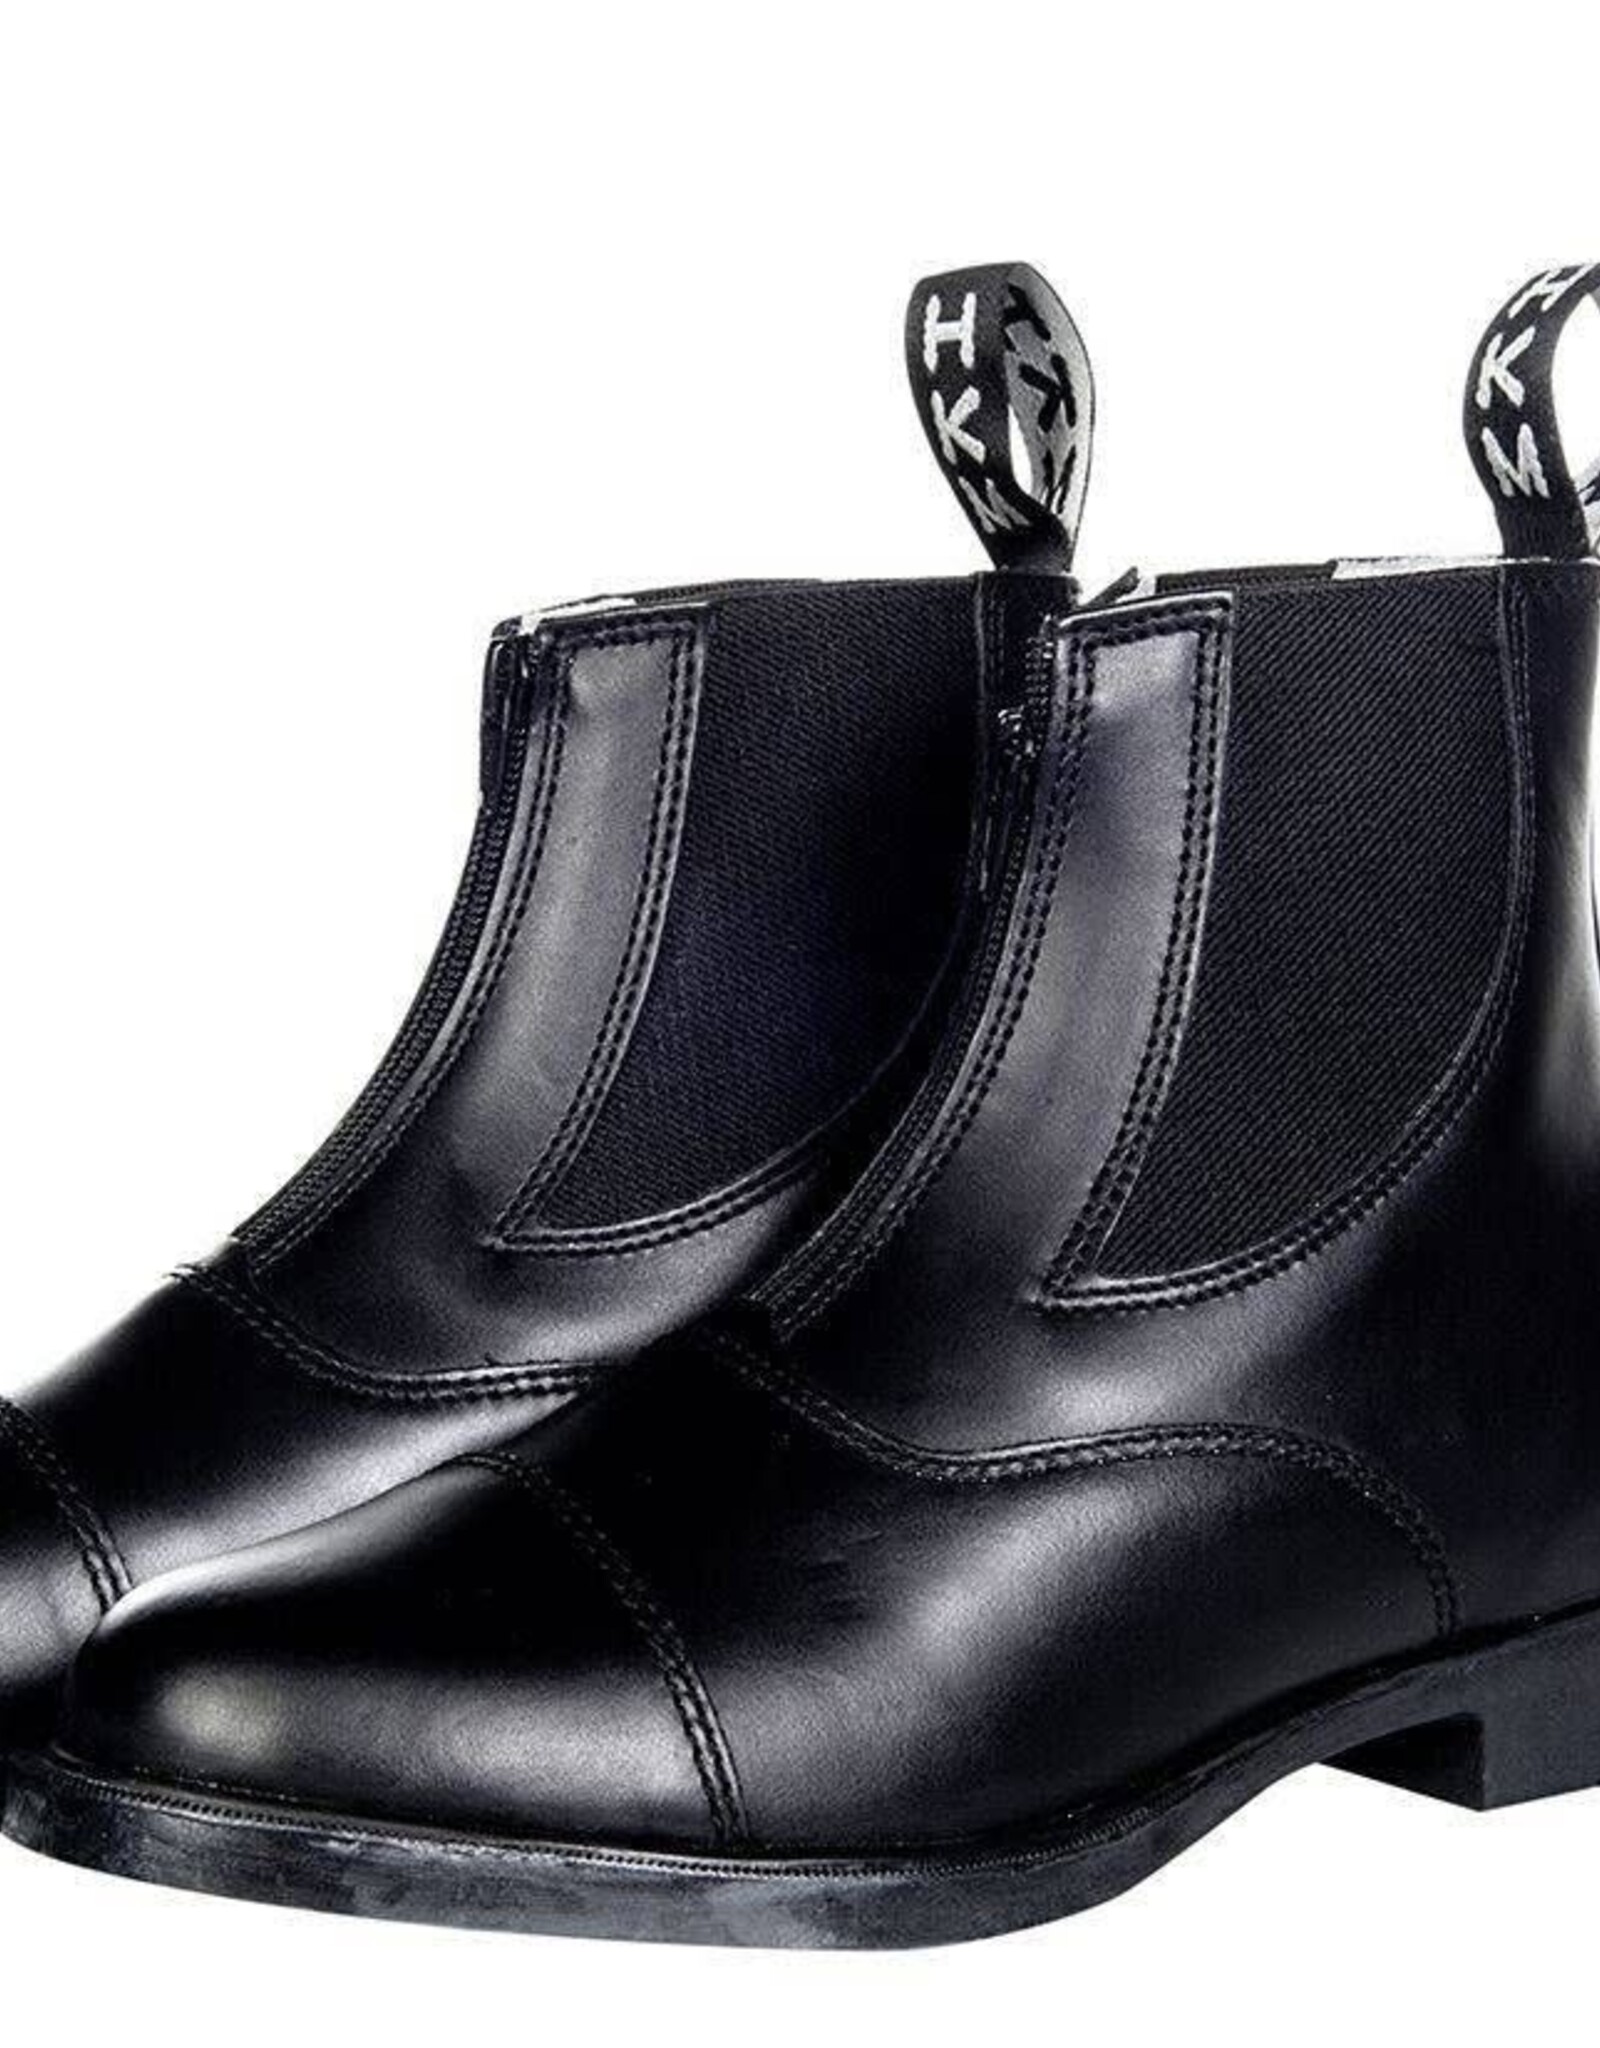 HKM Jodhpur boots with elastic vent + zip